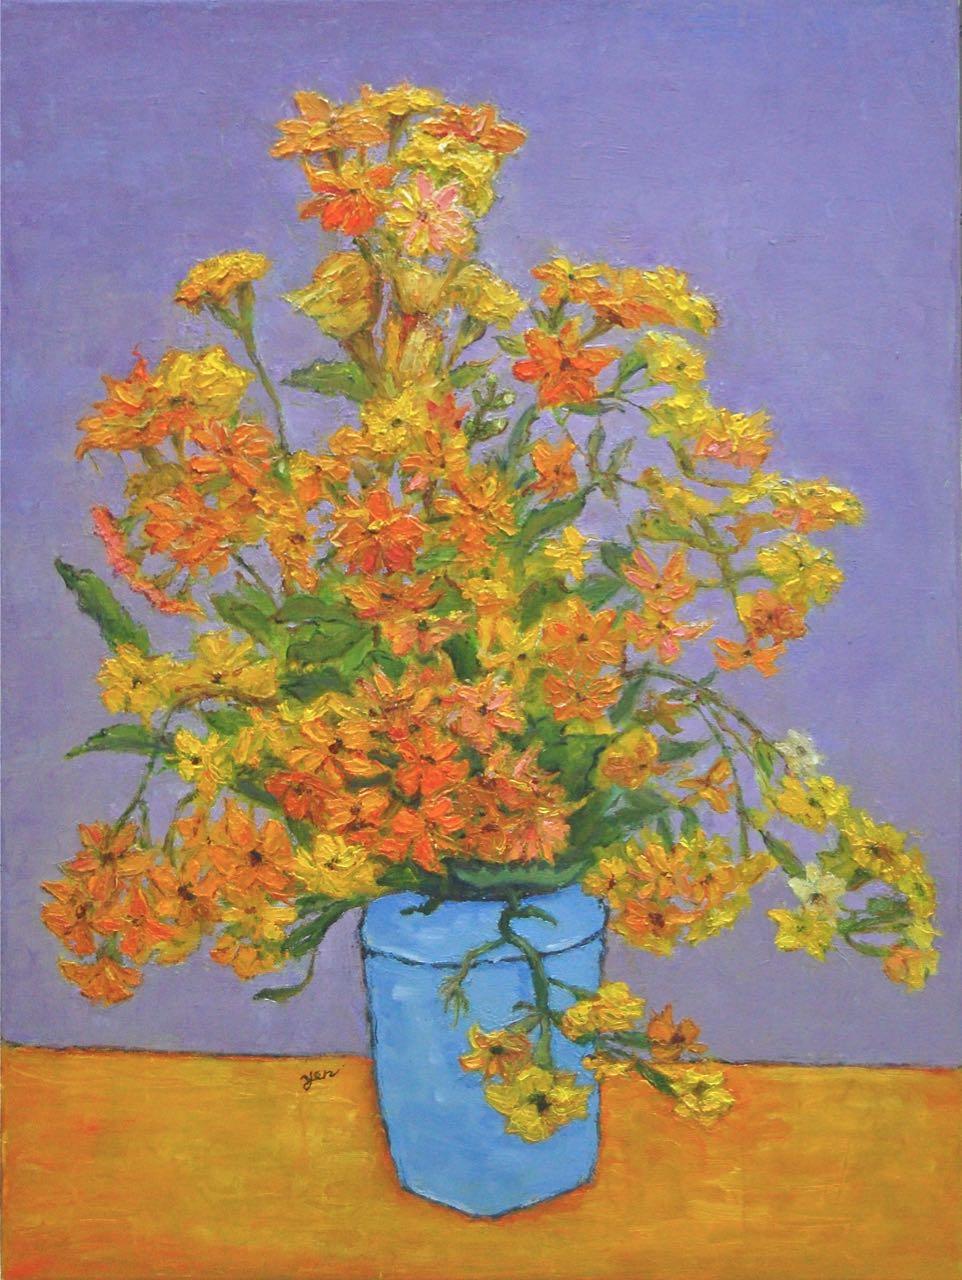 Yellow flowers in blue pot original oil painting, bright orange blooms impressionist still life art in impasto van gogh style vibrant colors